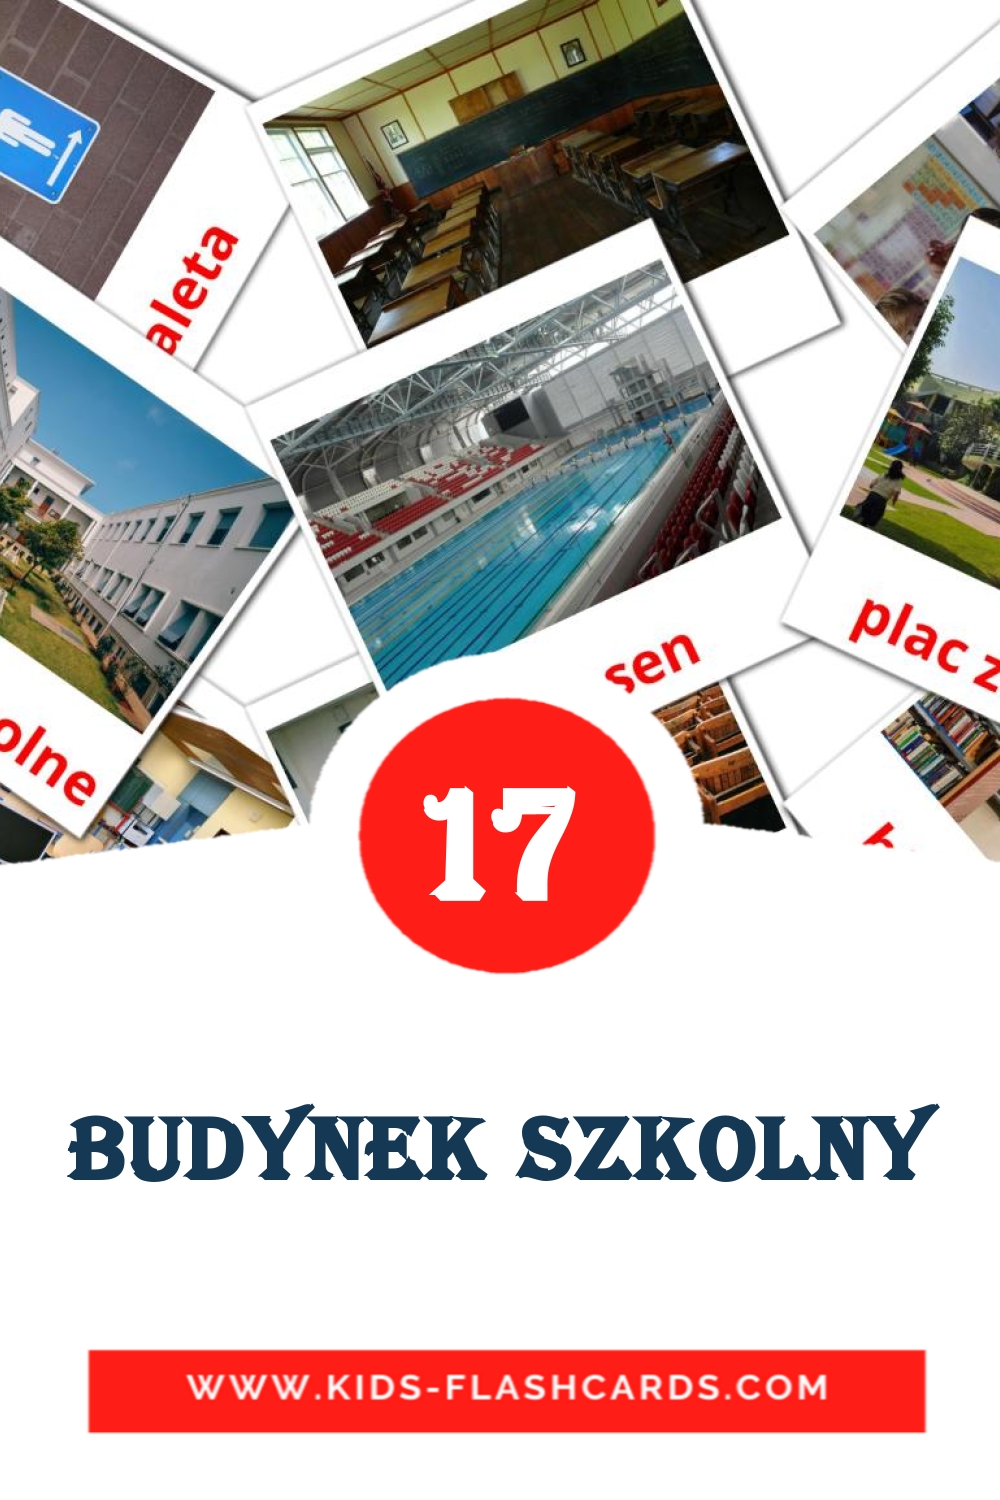 17 carte illustrate di Budynek szkolny per la scuola materna in polacco